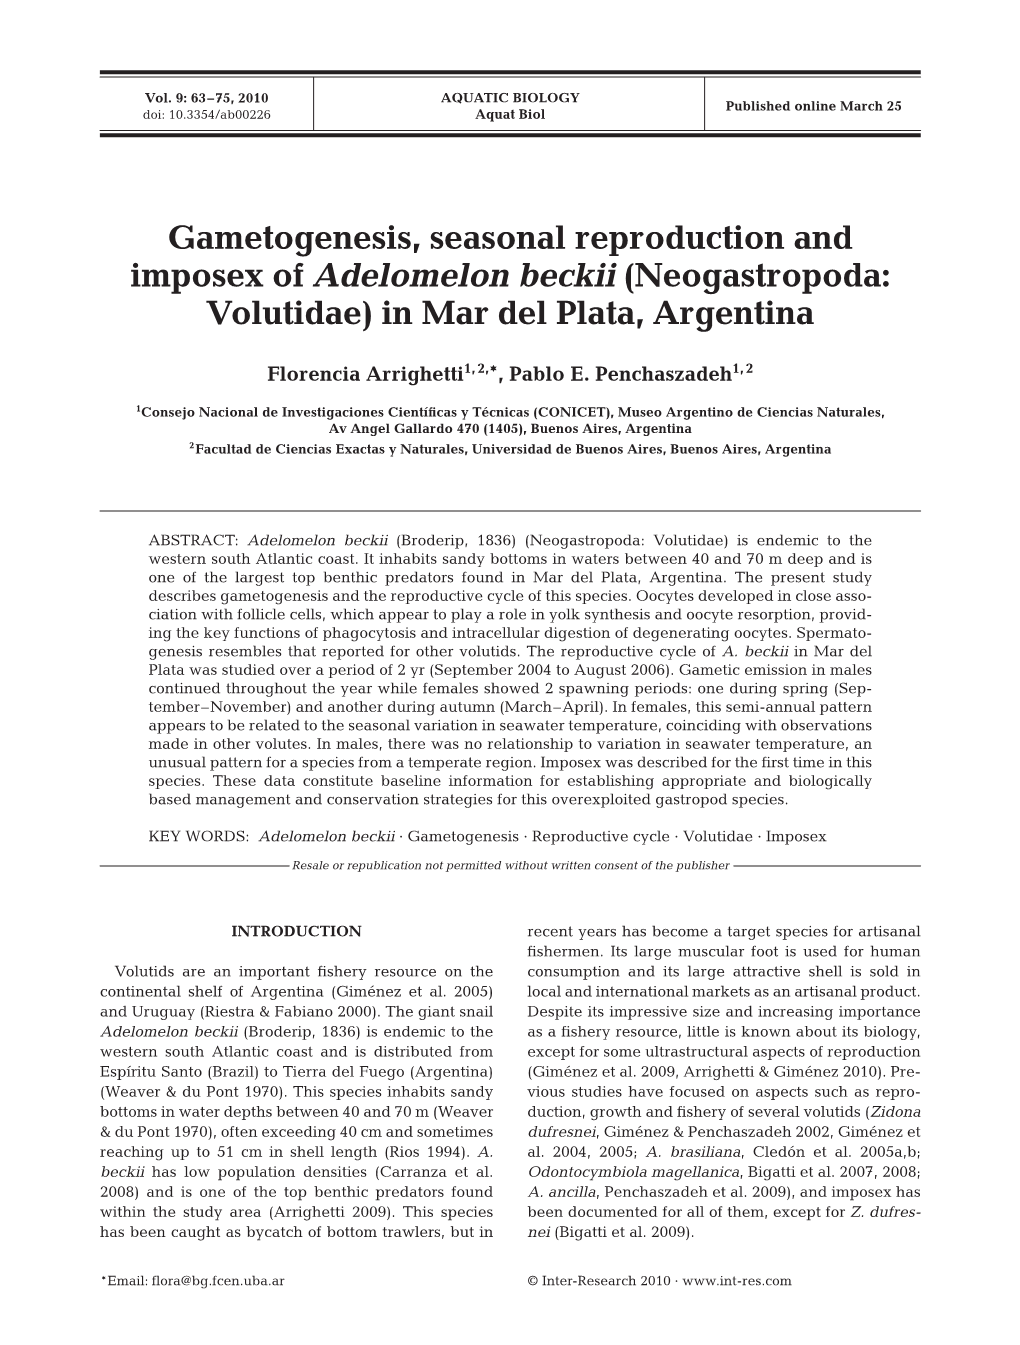 Gametogenesis, Seasonal Reproduction and Imposex of Adelomelon Beckii (Neogastropoda: Volutidae) in Mar Del Plata, Argentina